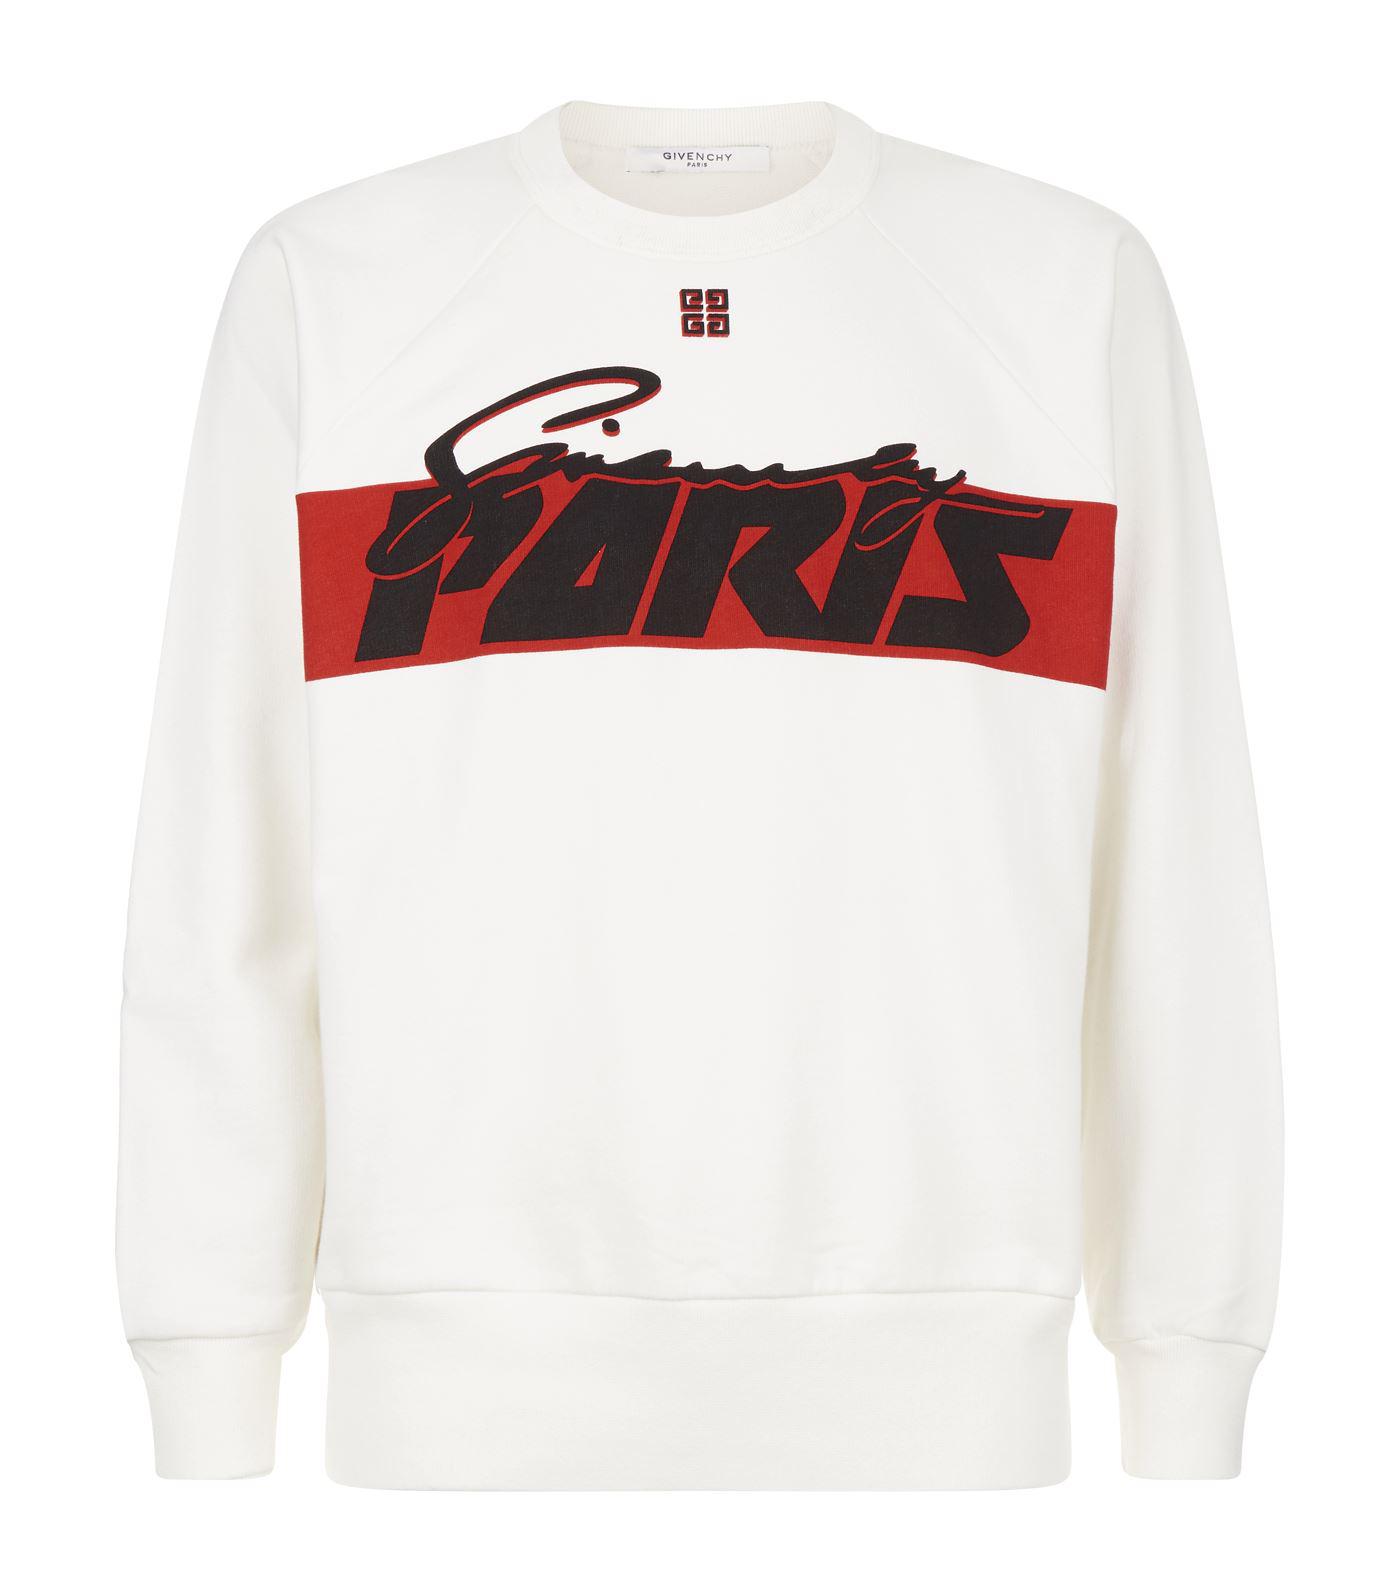 Givenchy Cotton Paris Print Sweatshirt in Beige (Natural) for Men - Lyst